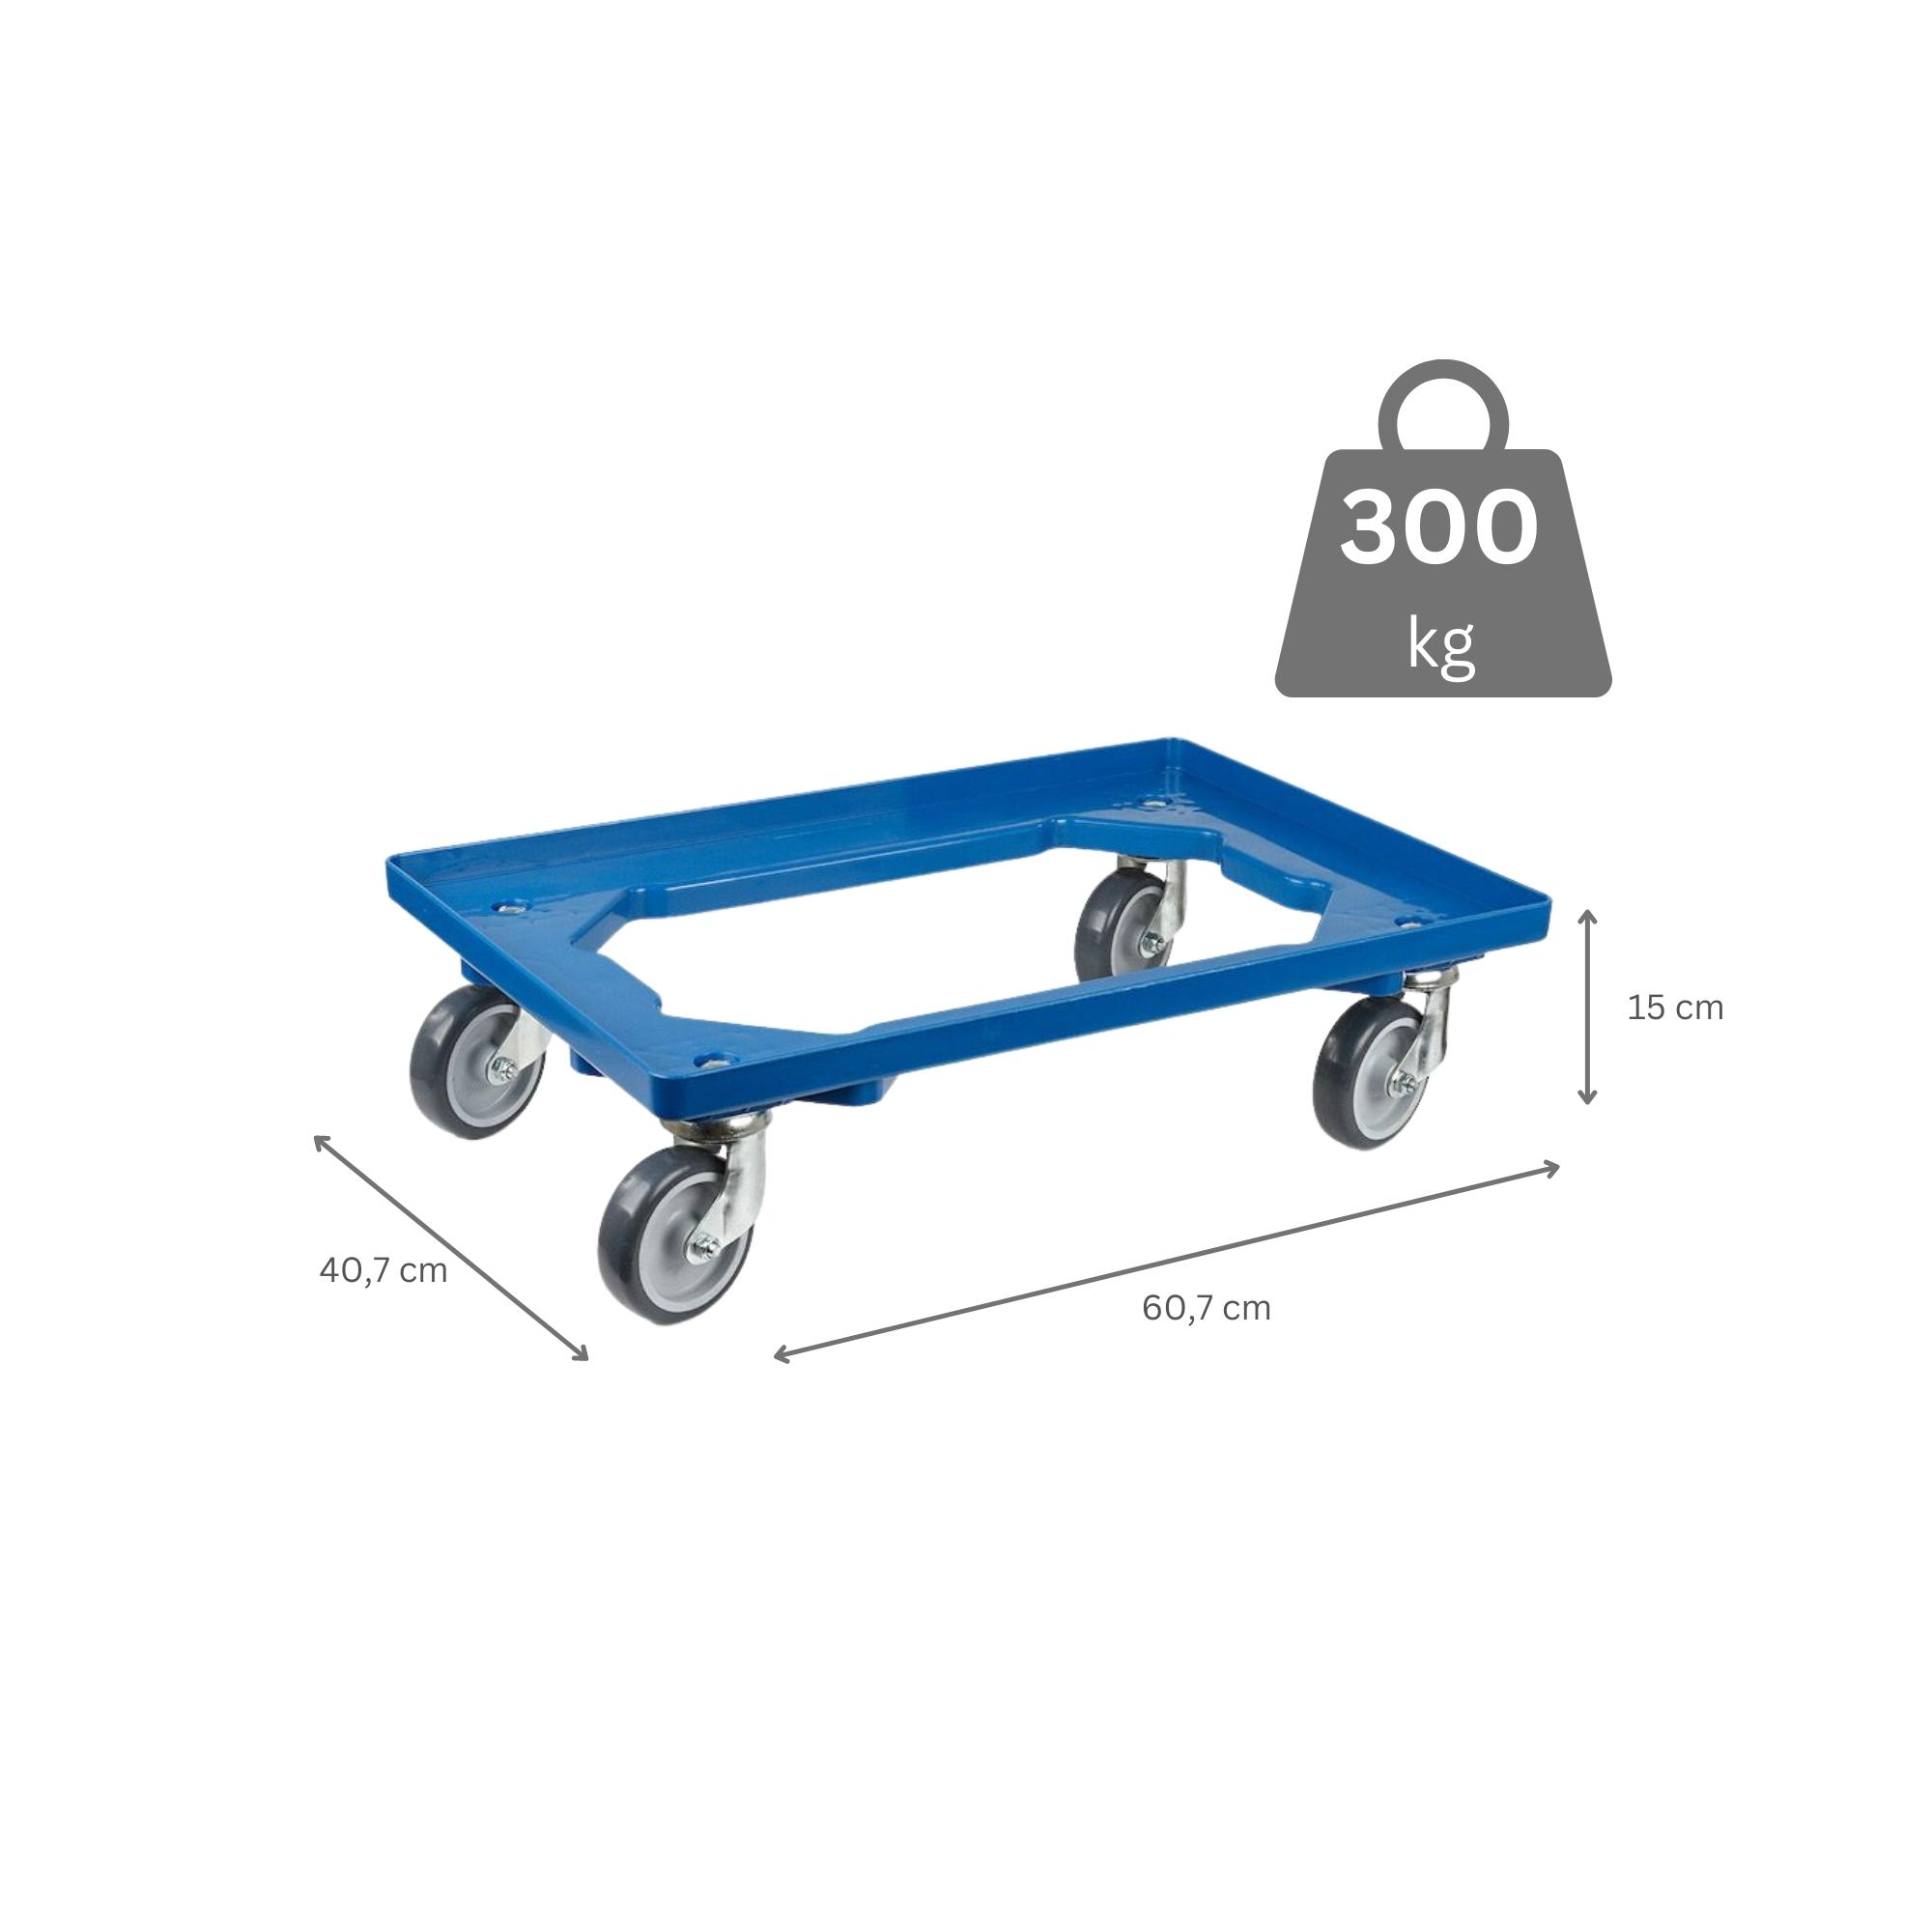 SparSet 10x Transportroller für Euroboxen 60x40cm mit Gummiräder blau | Offenes Deck | 2 Lenkrollen & 2 Bremsrollen | Traglast 300kg | Kistenroller Logistikroller Rollwagen Profi-Fahrgestell